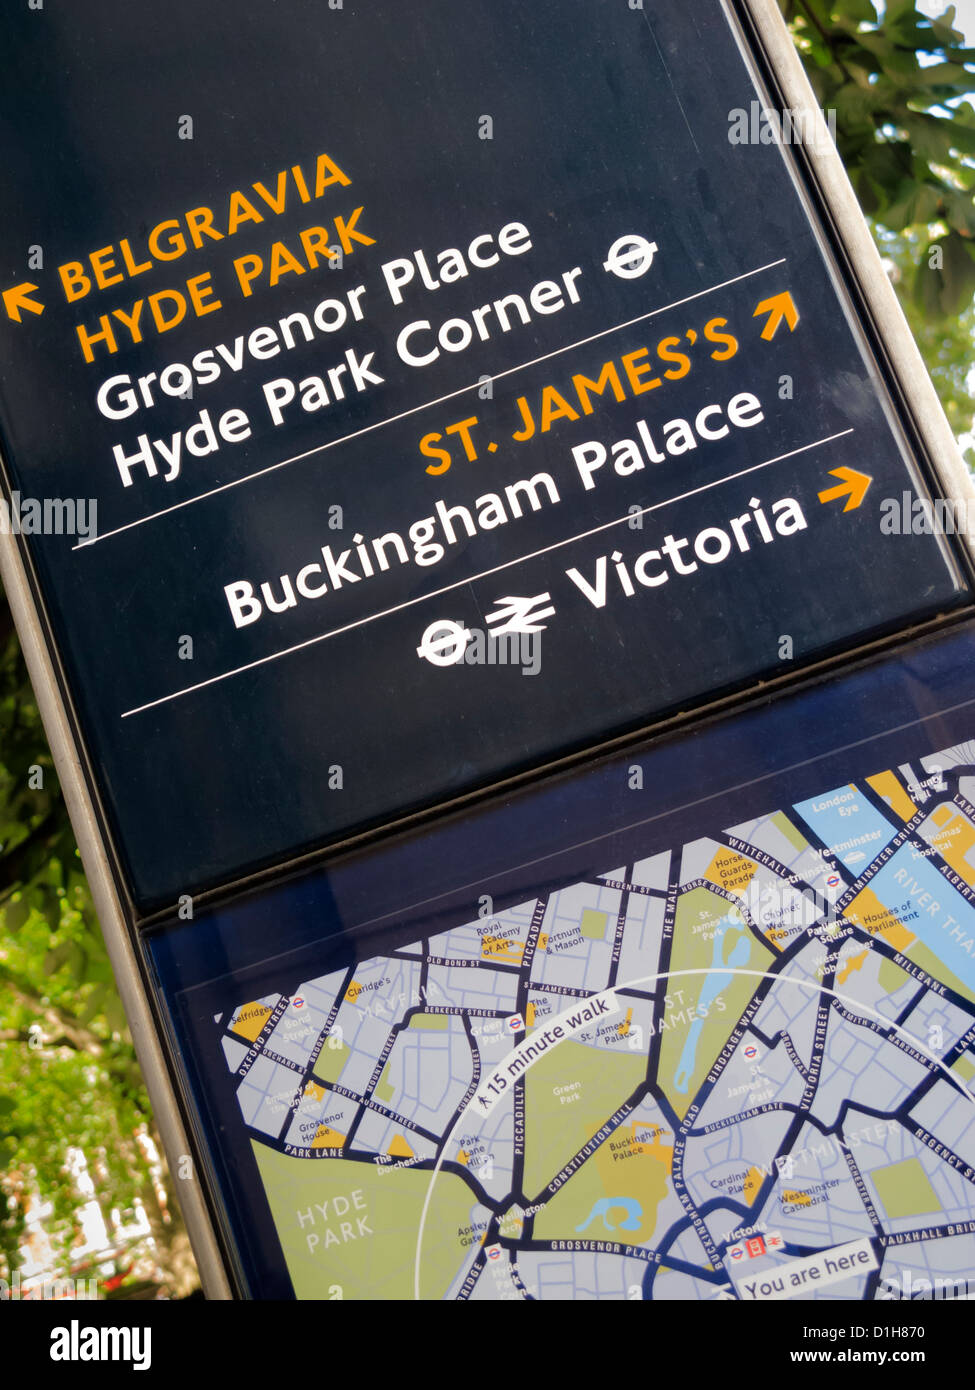 Information Sign, Belgravia, Hyde Park, Buckingham Palace, Victoria, London England Stock Photo